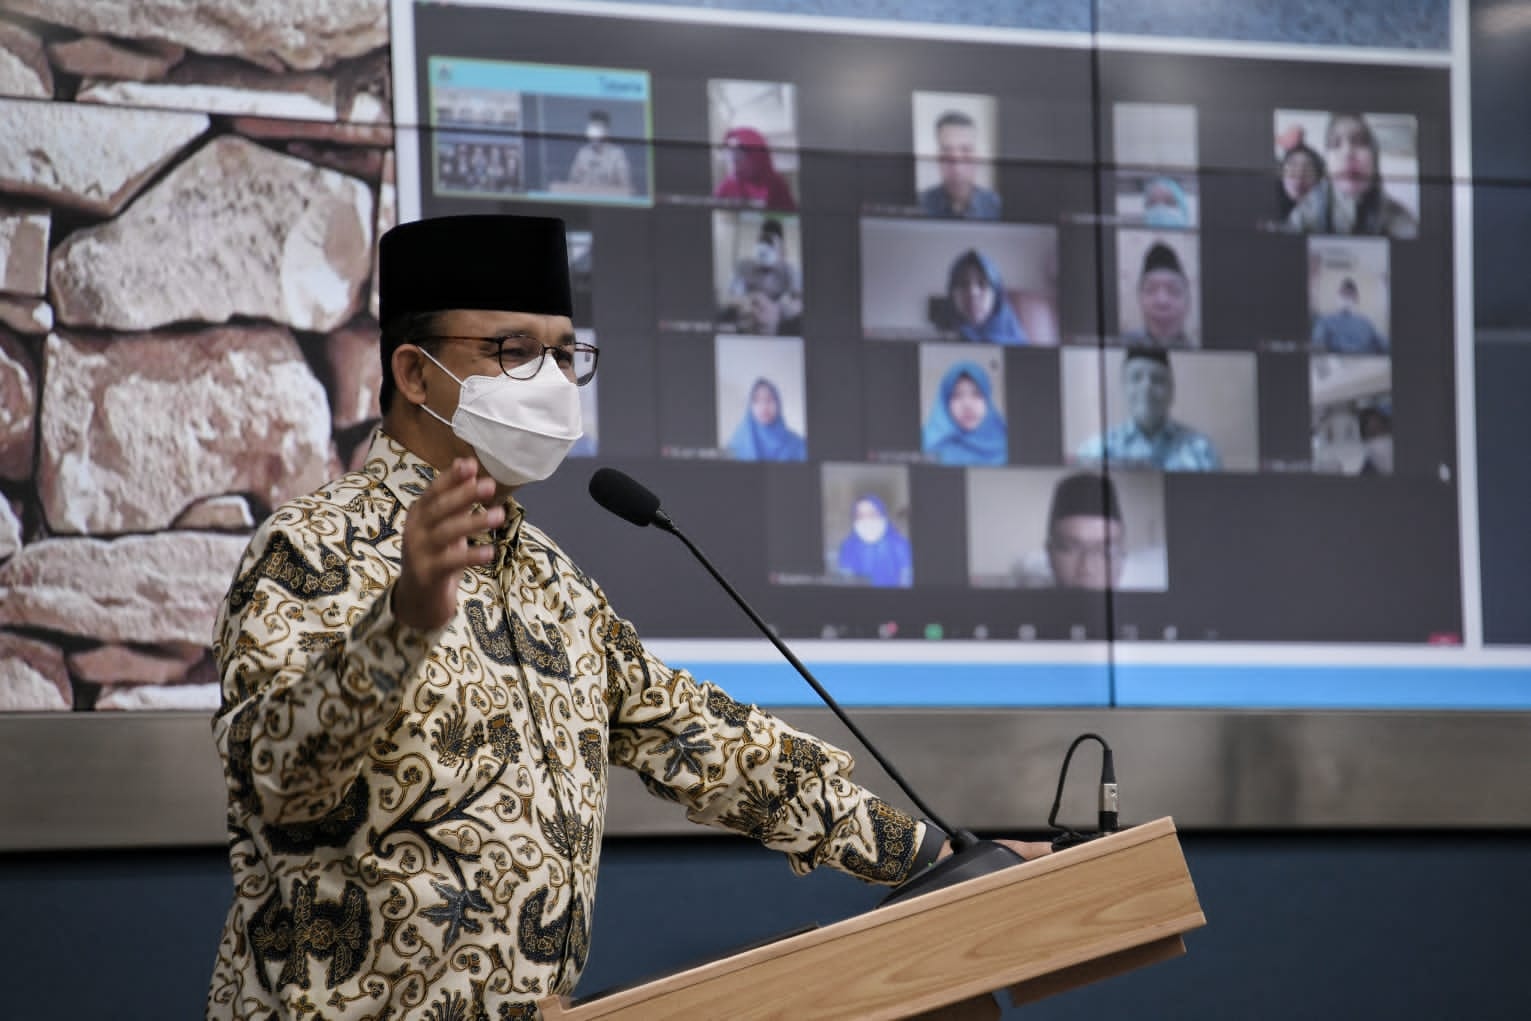 Empat Tahun Pimpin DKI Jakarta, Anies Berhasil Selesaikan Berbagai Persoalan Ruwet